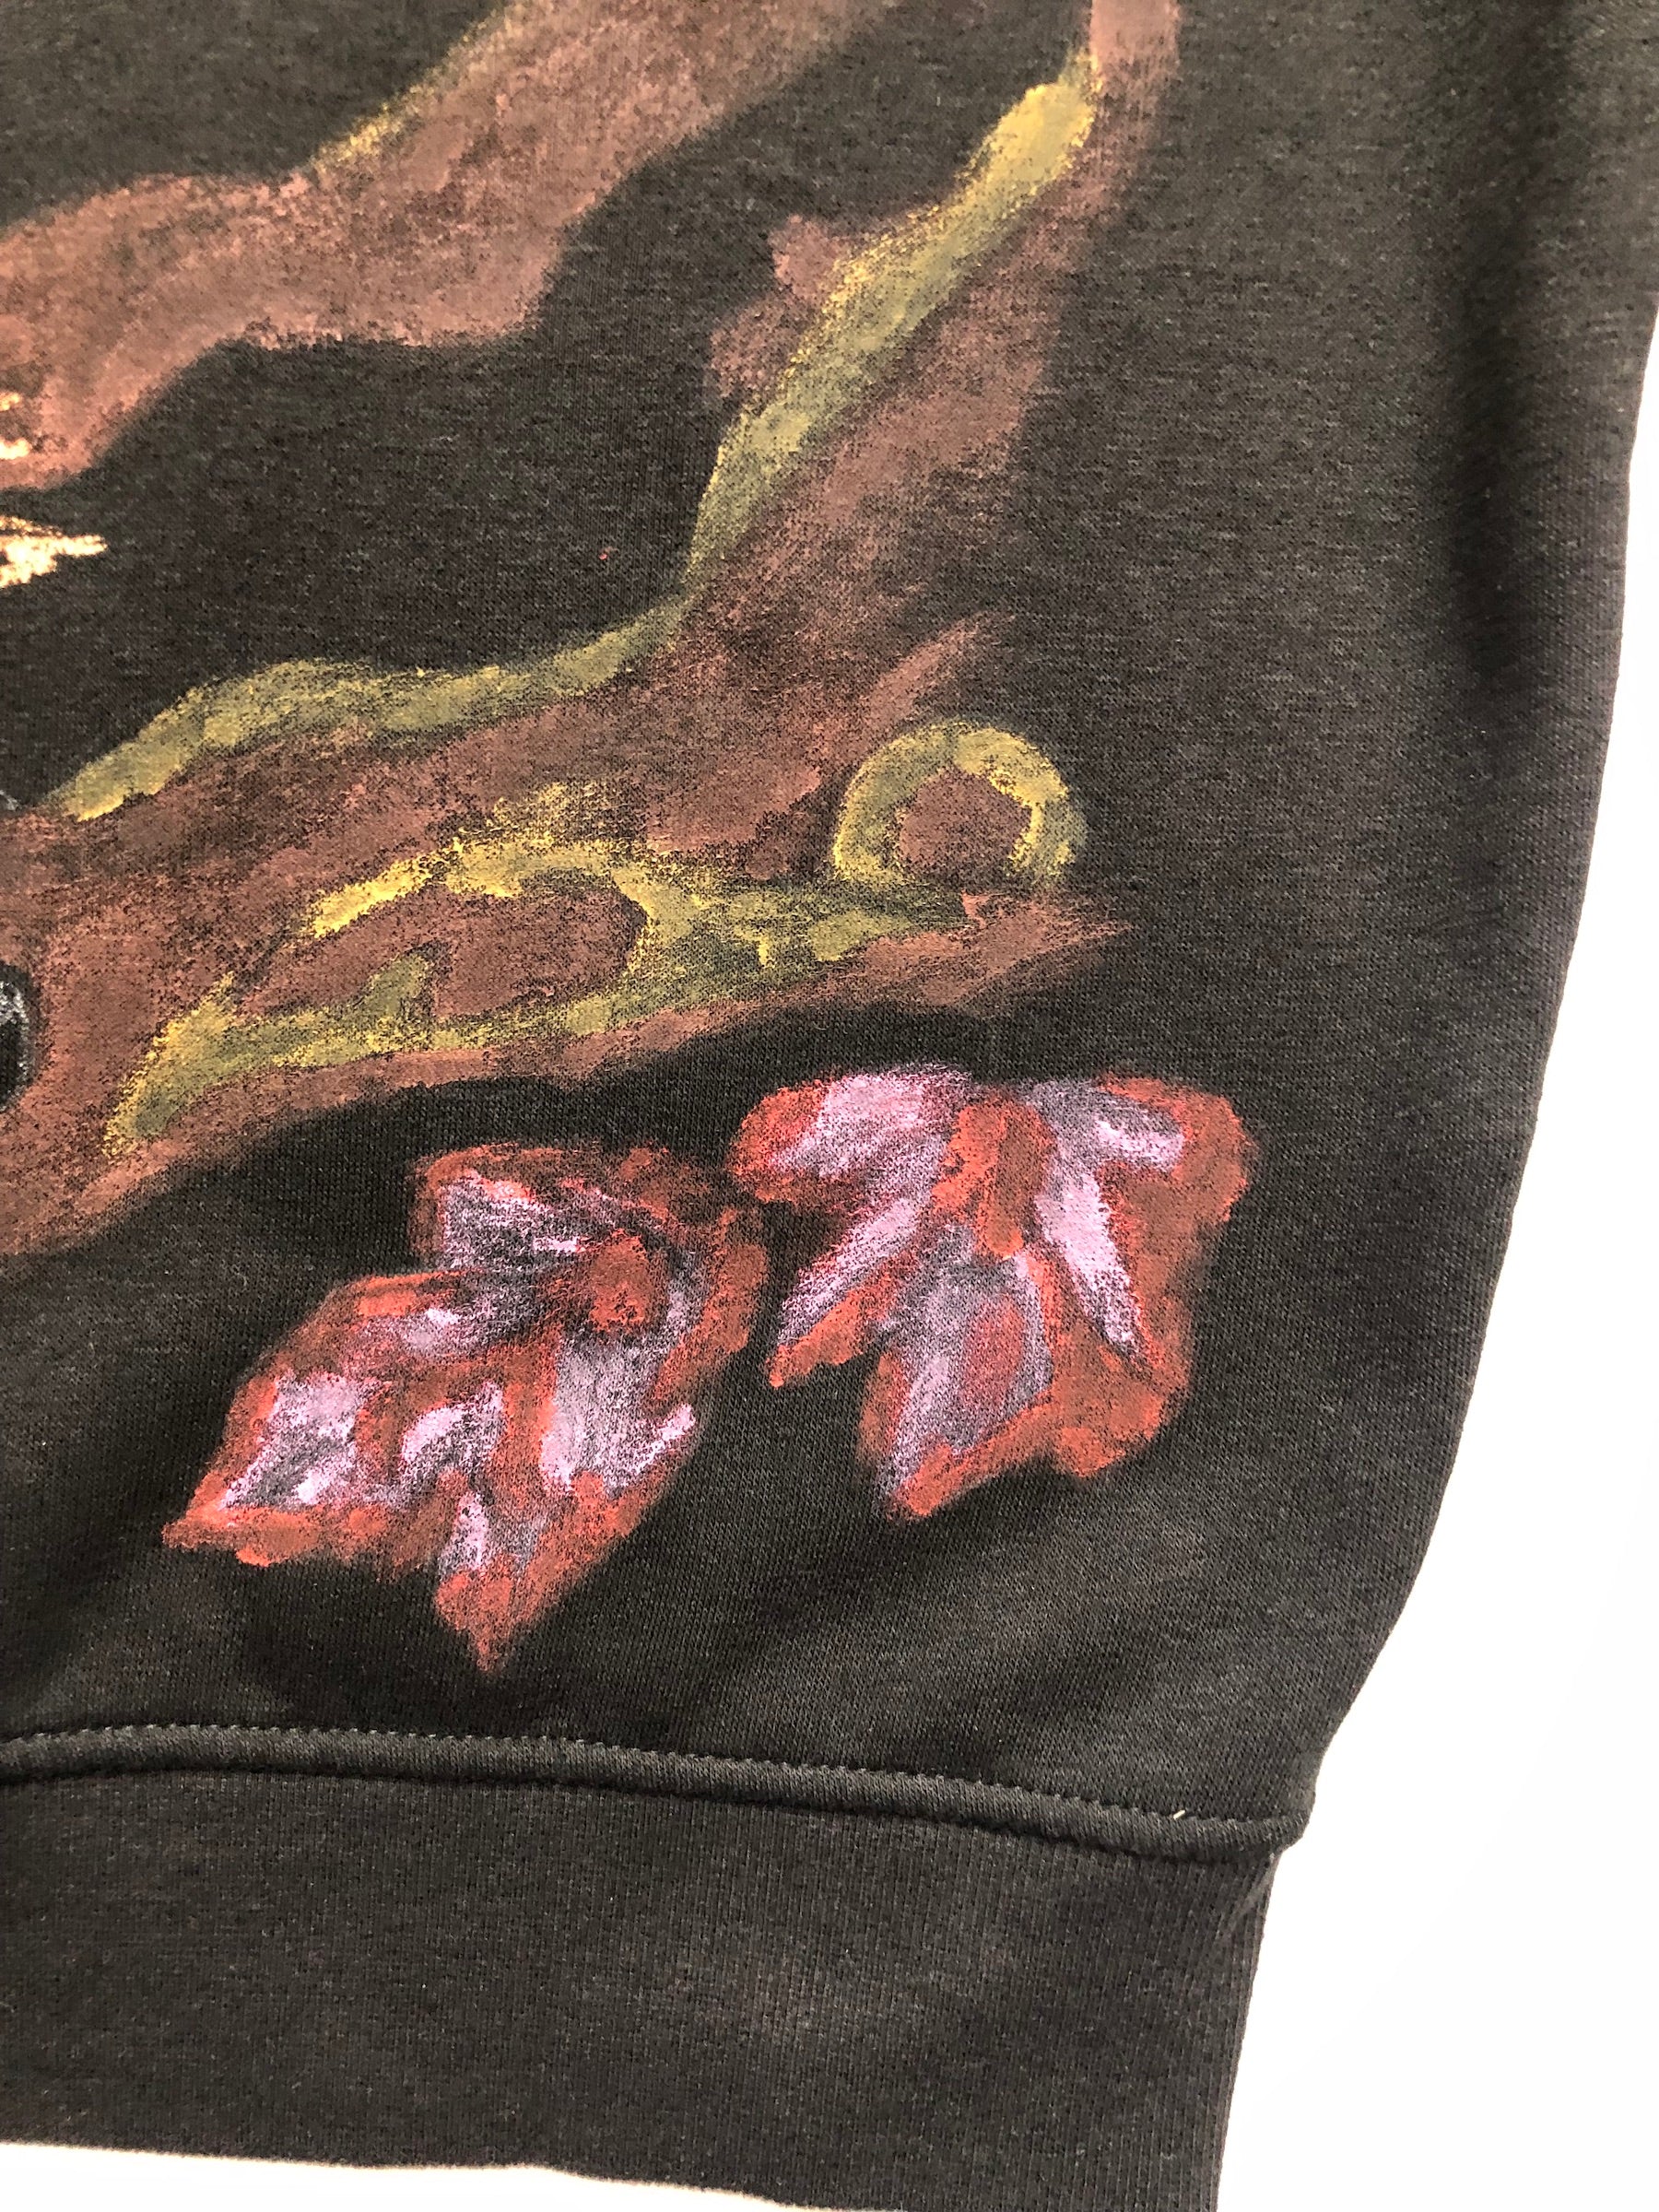 Women's hoodie hand-painted details